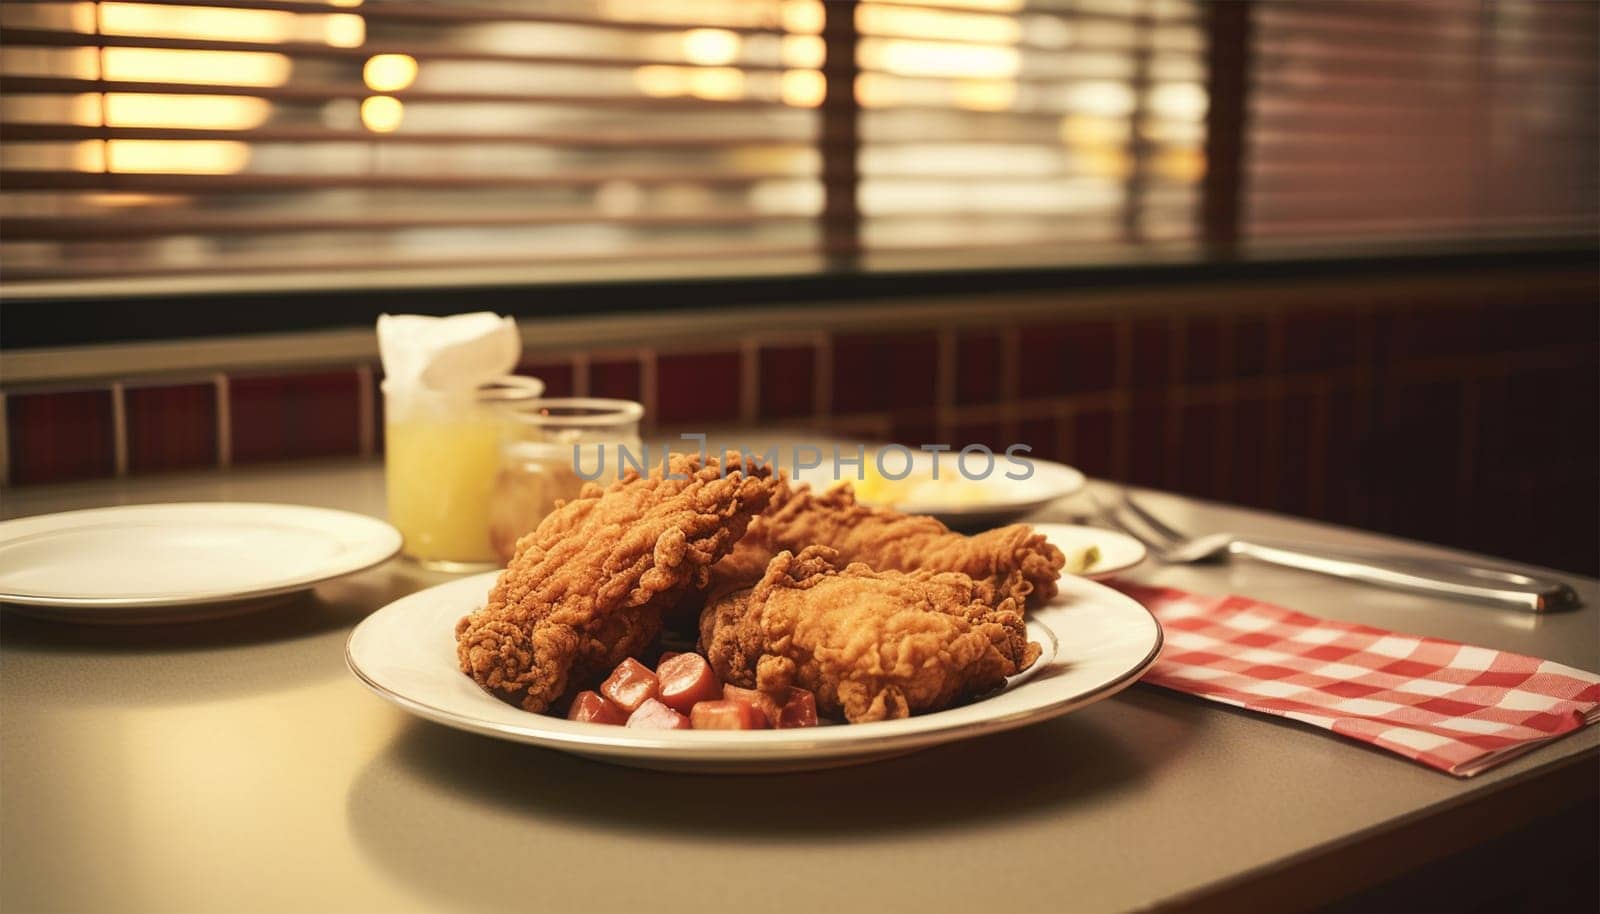 Fried chicken on plate in retro diner vintage design. Roasted chicken drumsticks in restaurant. Fast food concept by Annebel146